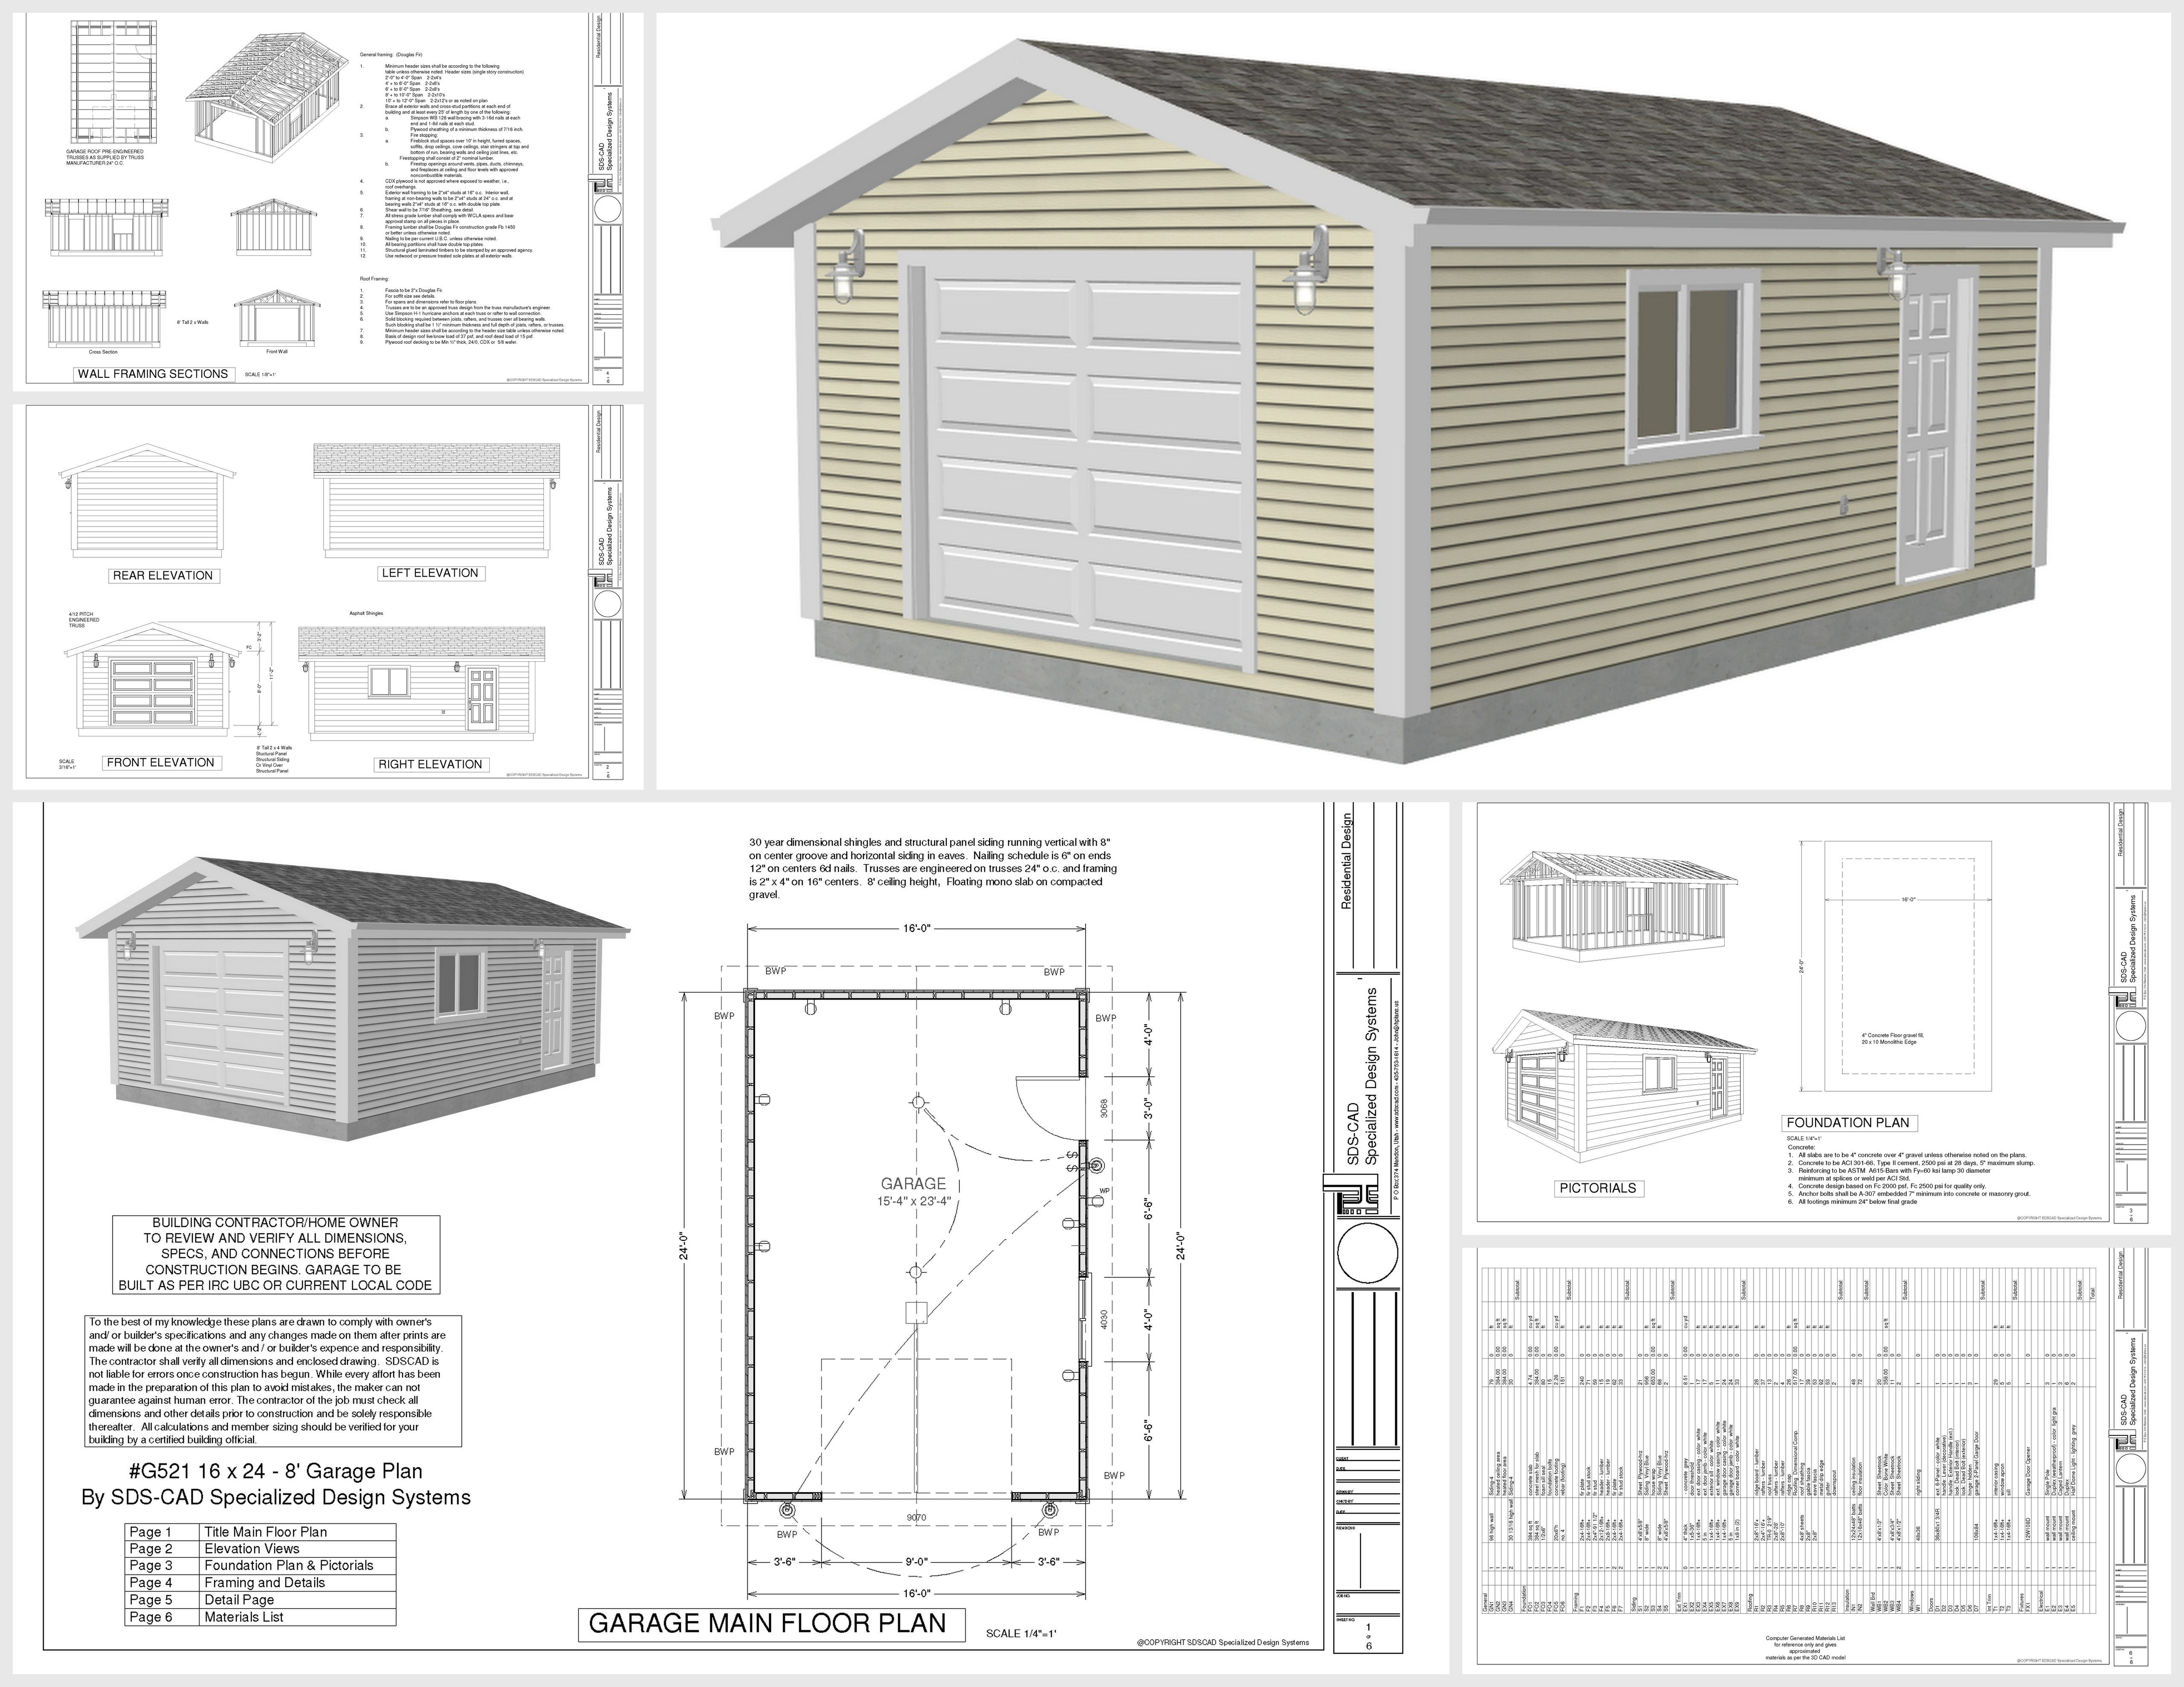 G521 16 x 24 x 8 Garage Plans 7 x 9 garage door 8' walls 4/12 pitch ro...